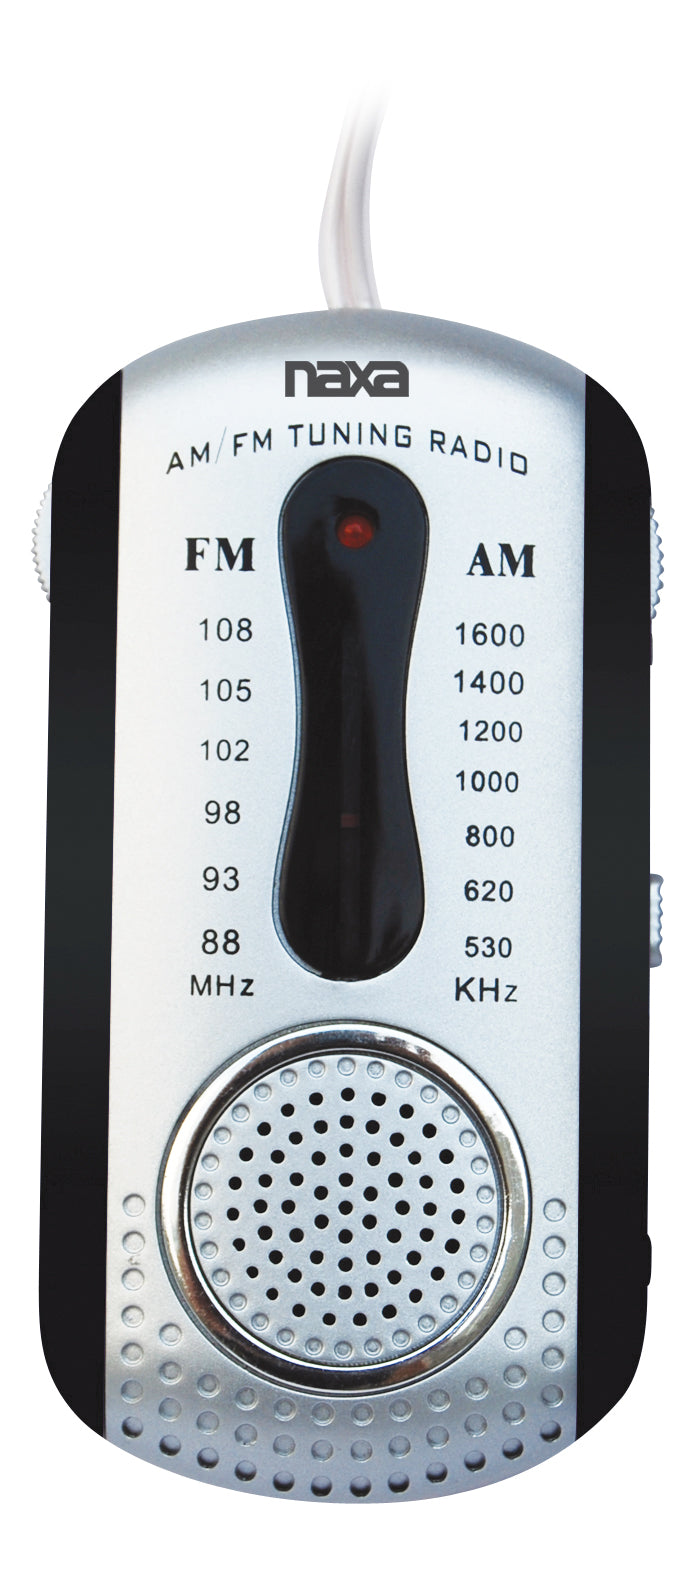 AM FM Mini Pocket Radio with Built-In Speaker (NR-721)